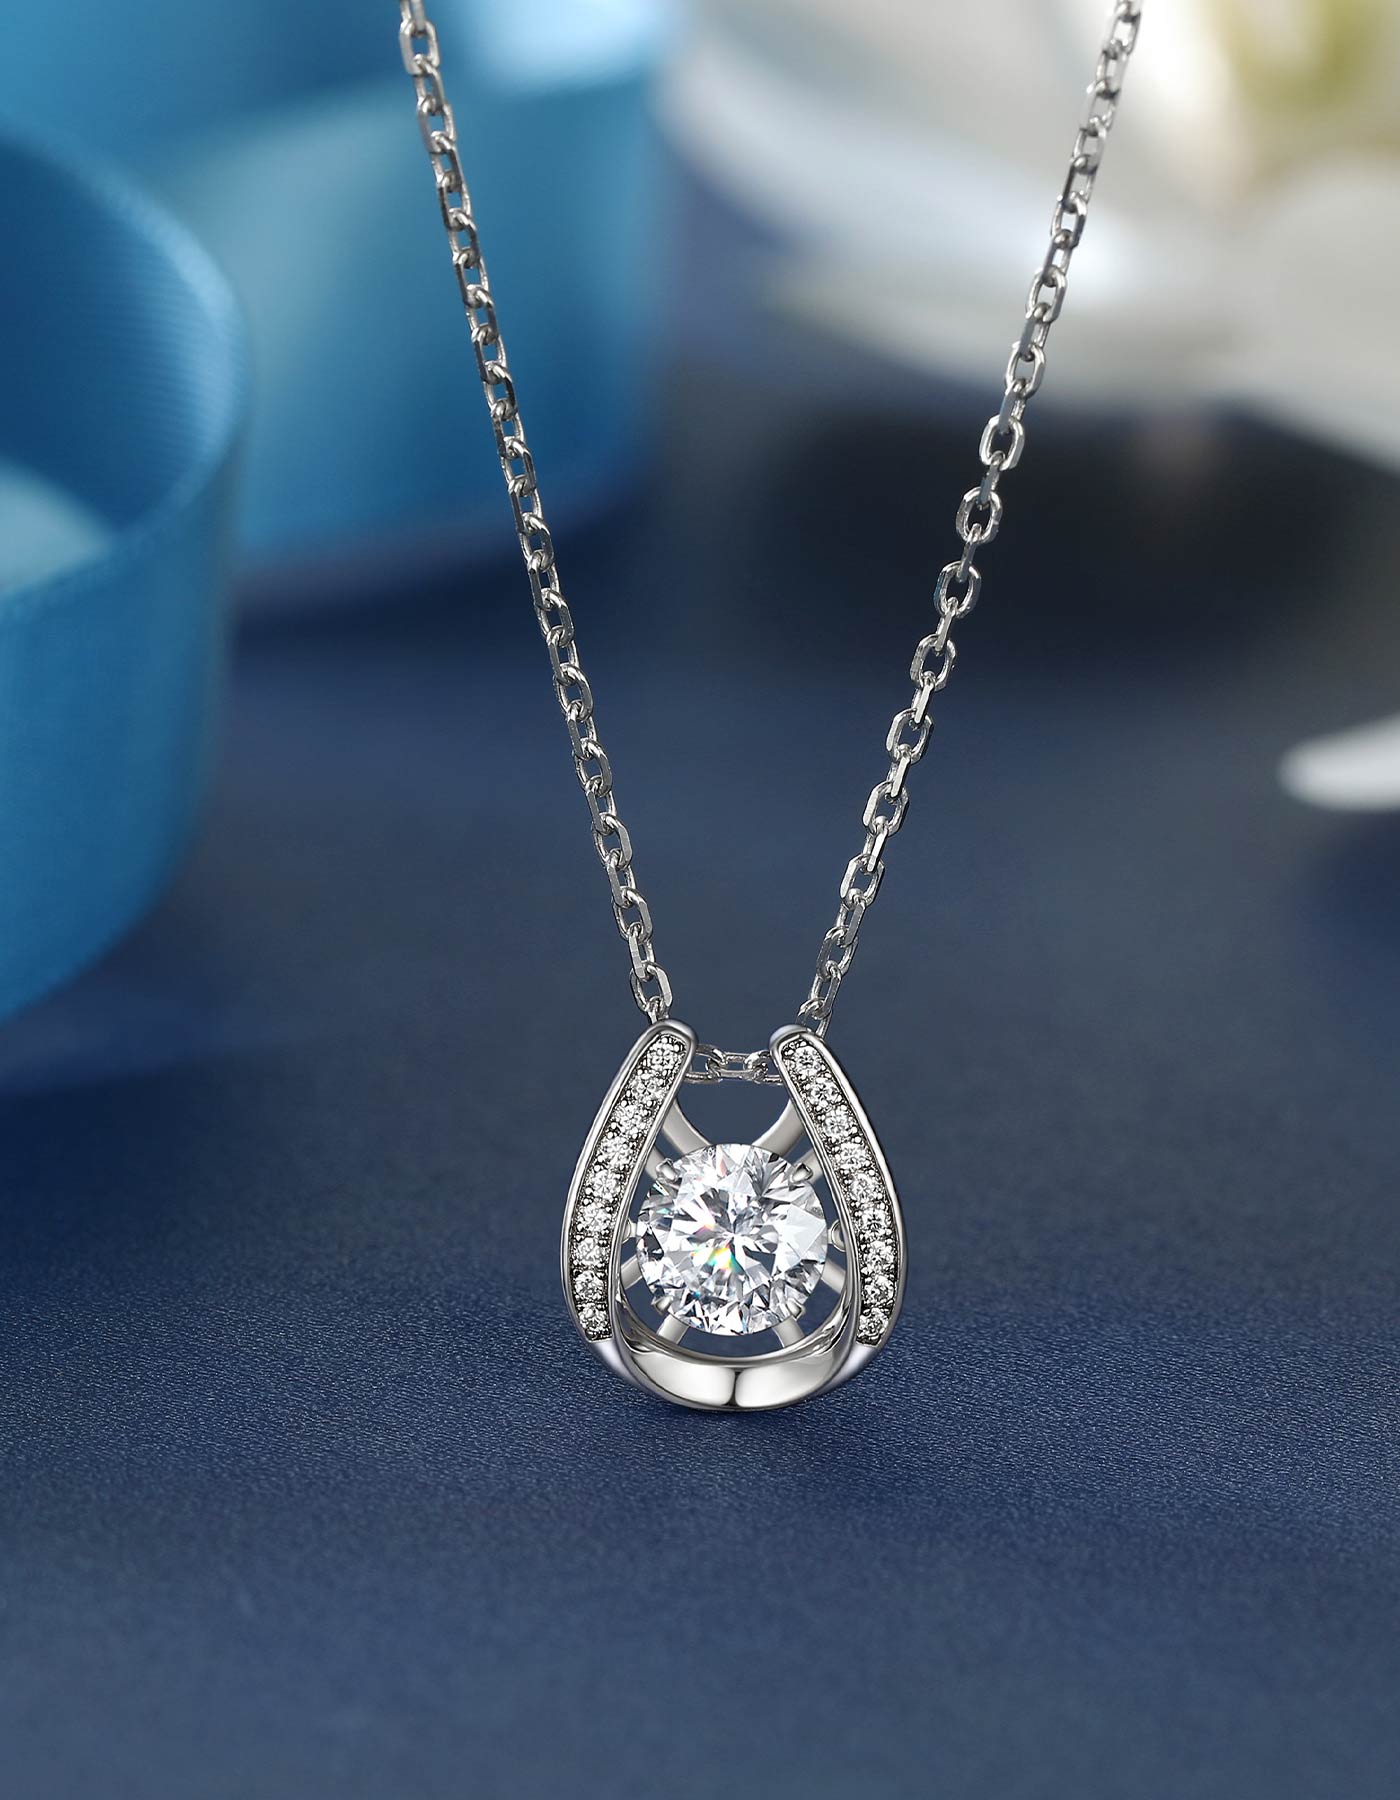 Sapphire & Diamond Necklace: Black Beauty Spirit Of The Wild West